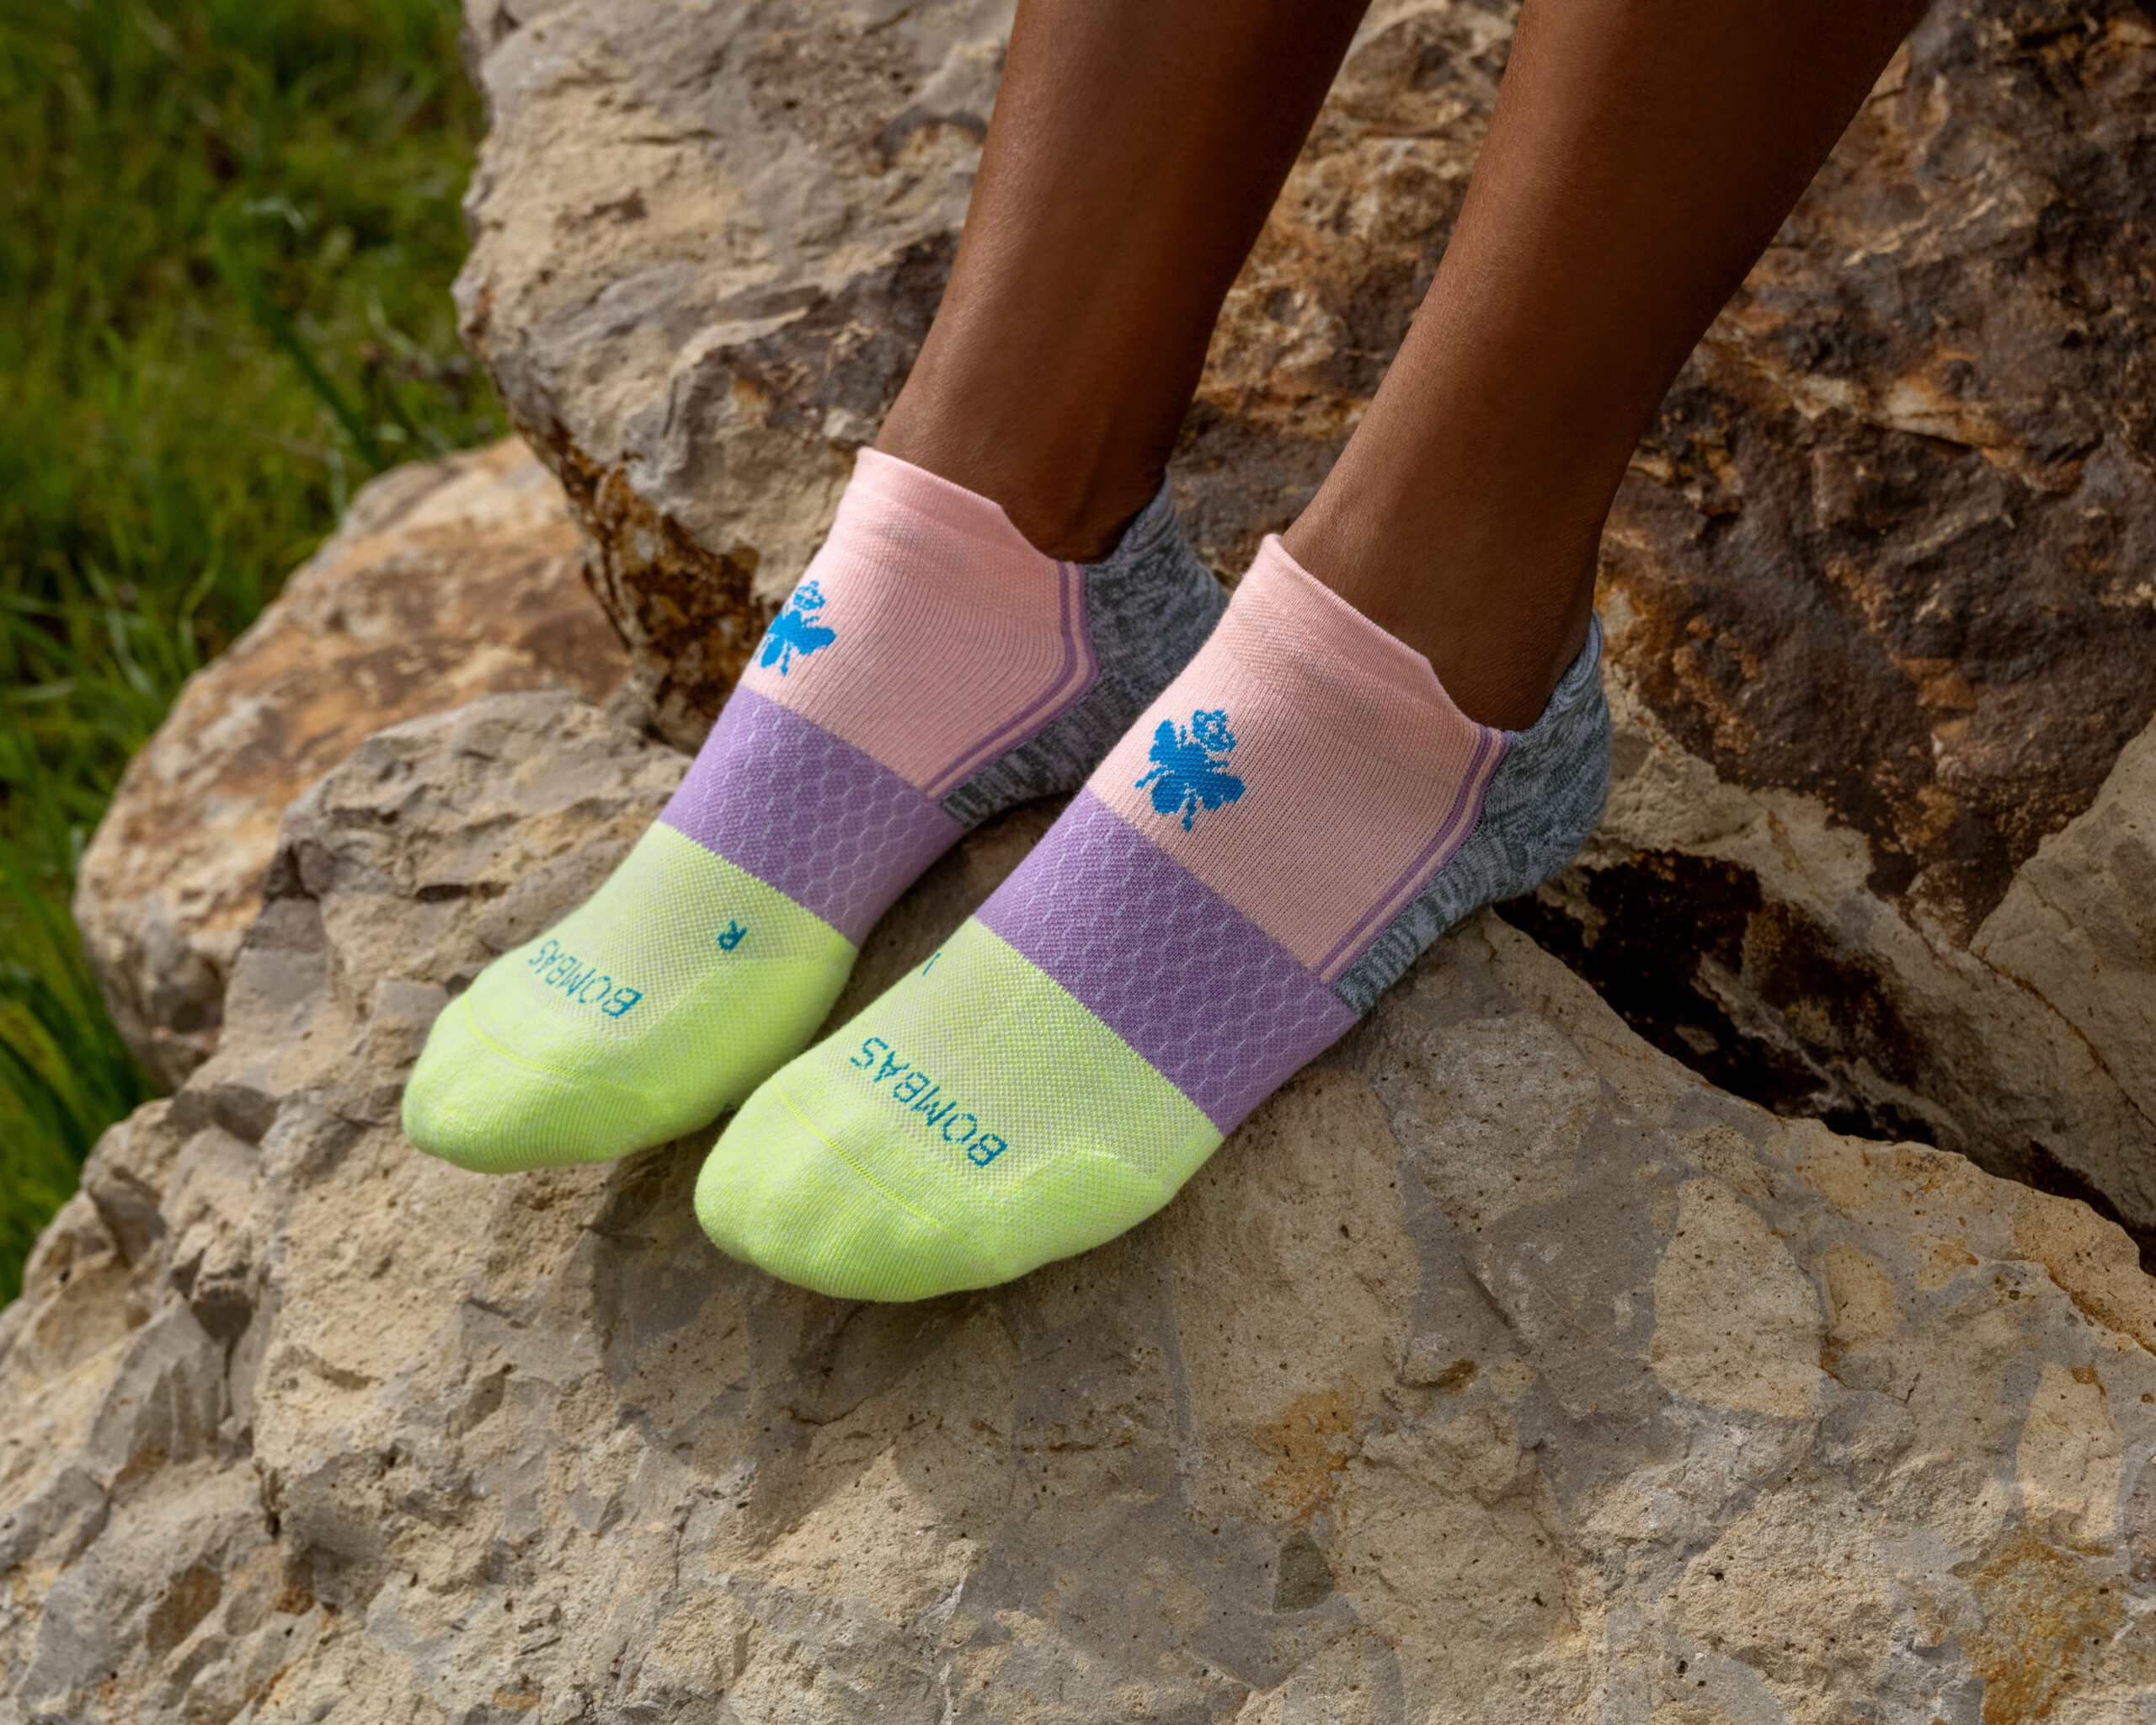 a pair of feet wearing Bombas socks